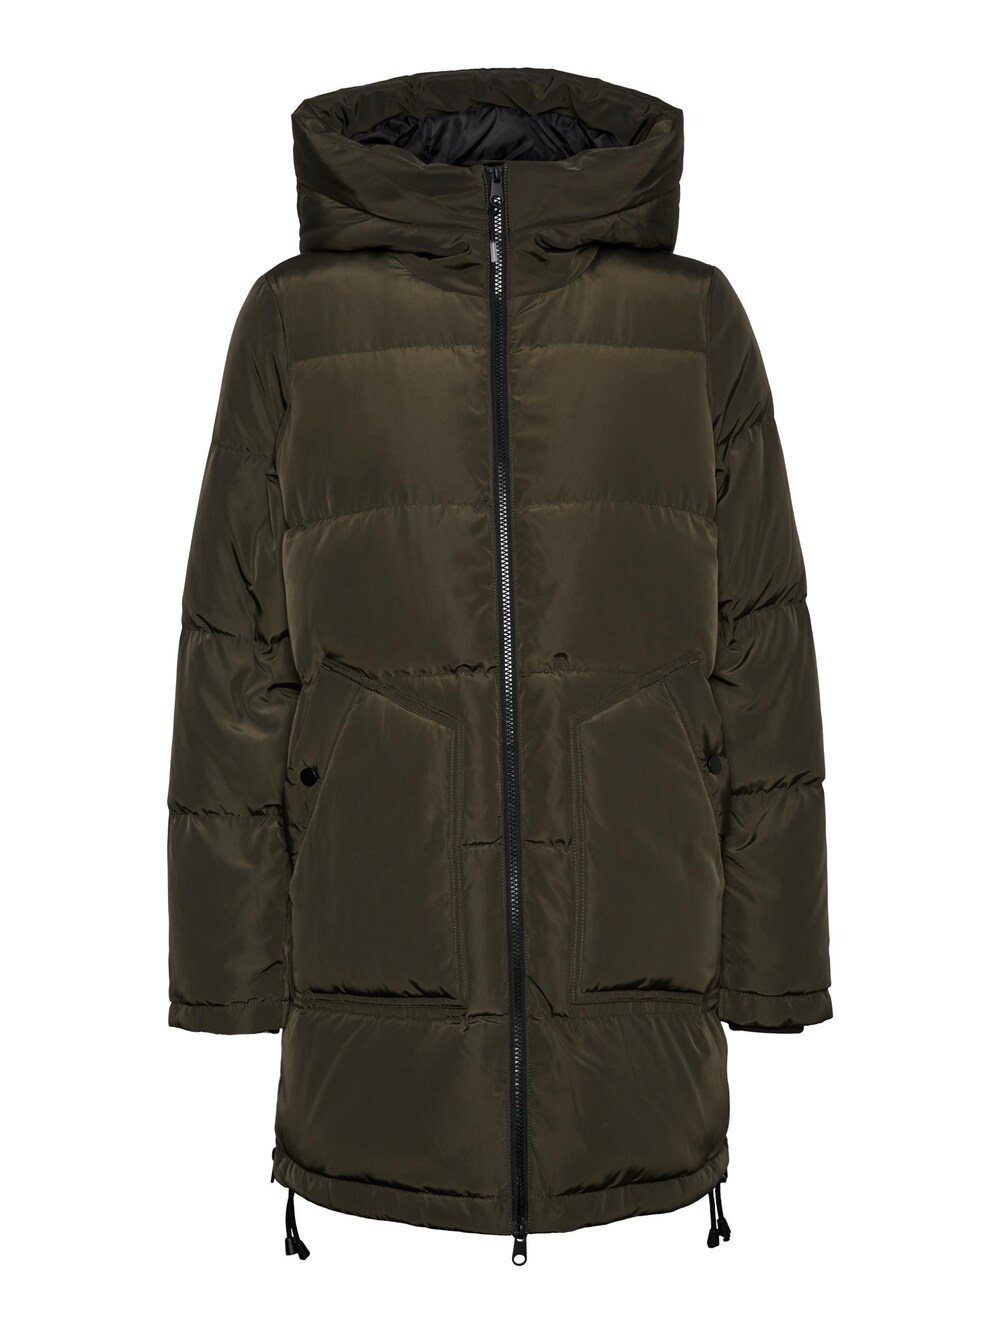 Зимняя куртка Vero Moda Oslo, темно коричневый зимняя куртка vero moda curve noe темно зеленый